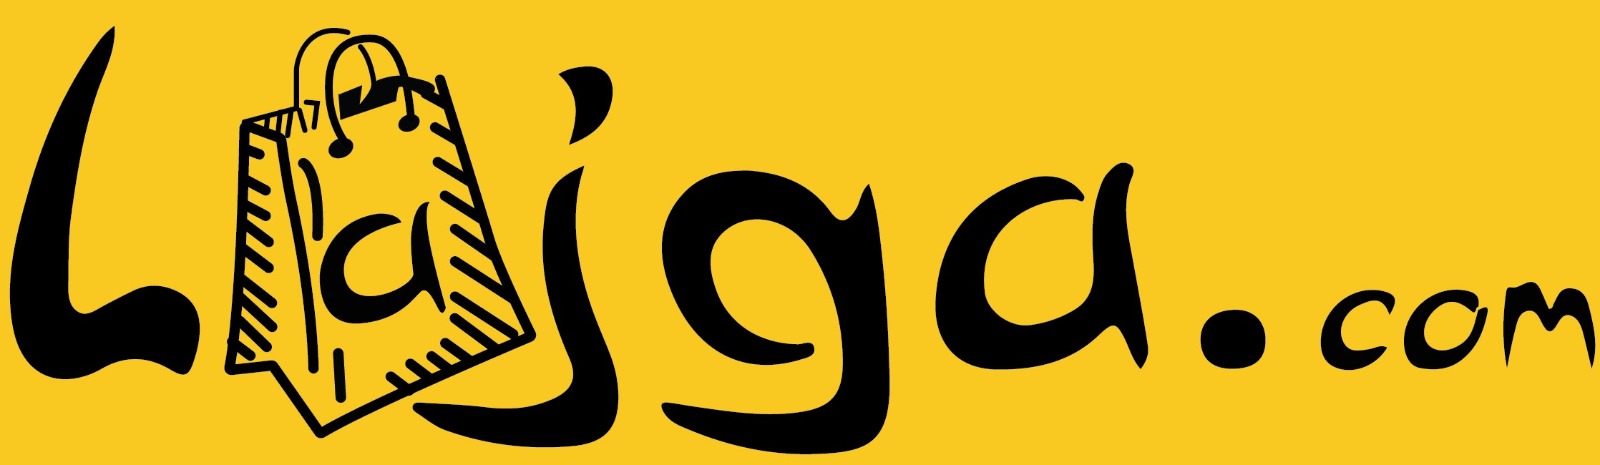 Lajga.com